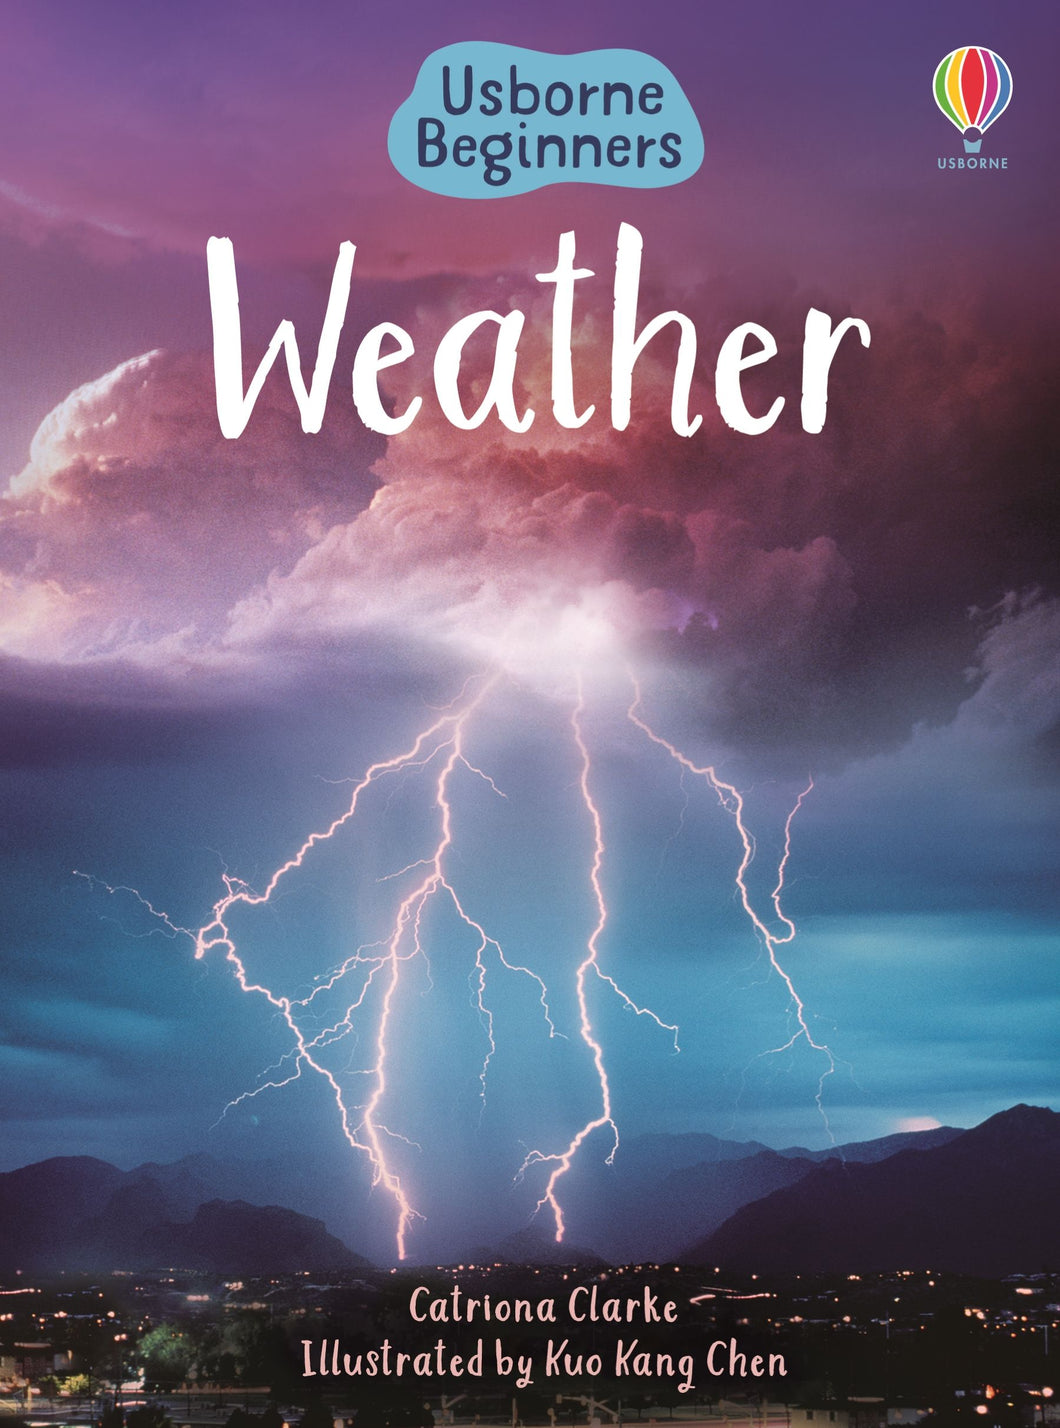 Usborne Beginners - Weather